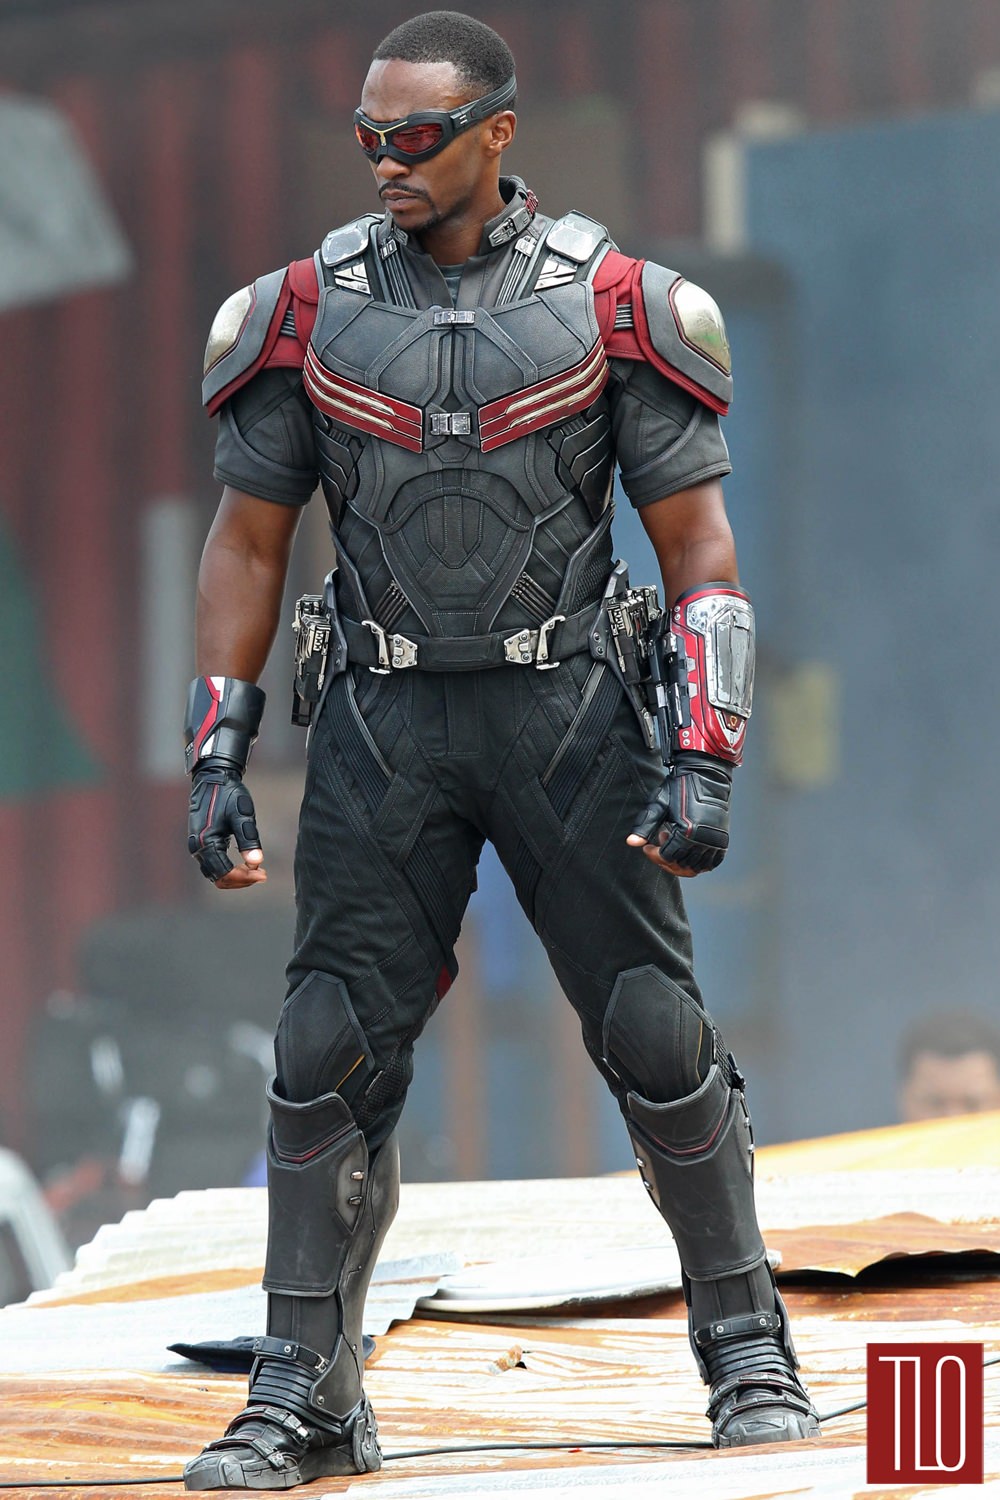 Anthony-Mackie-On-Movie-Set-Captain-America-Civil-War-Costumes-Tom-Lorenzo-Site-TLO (1)